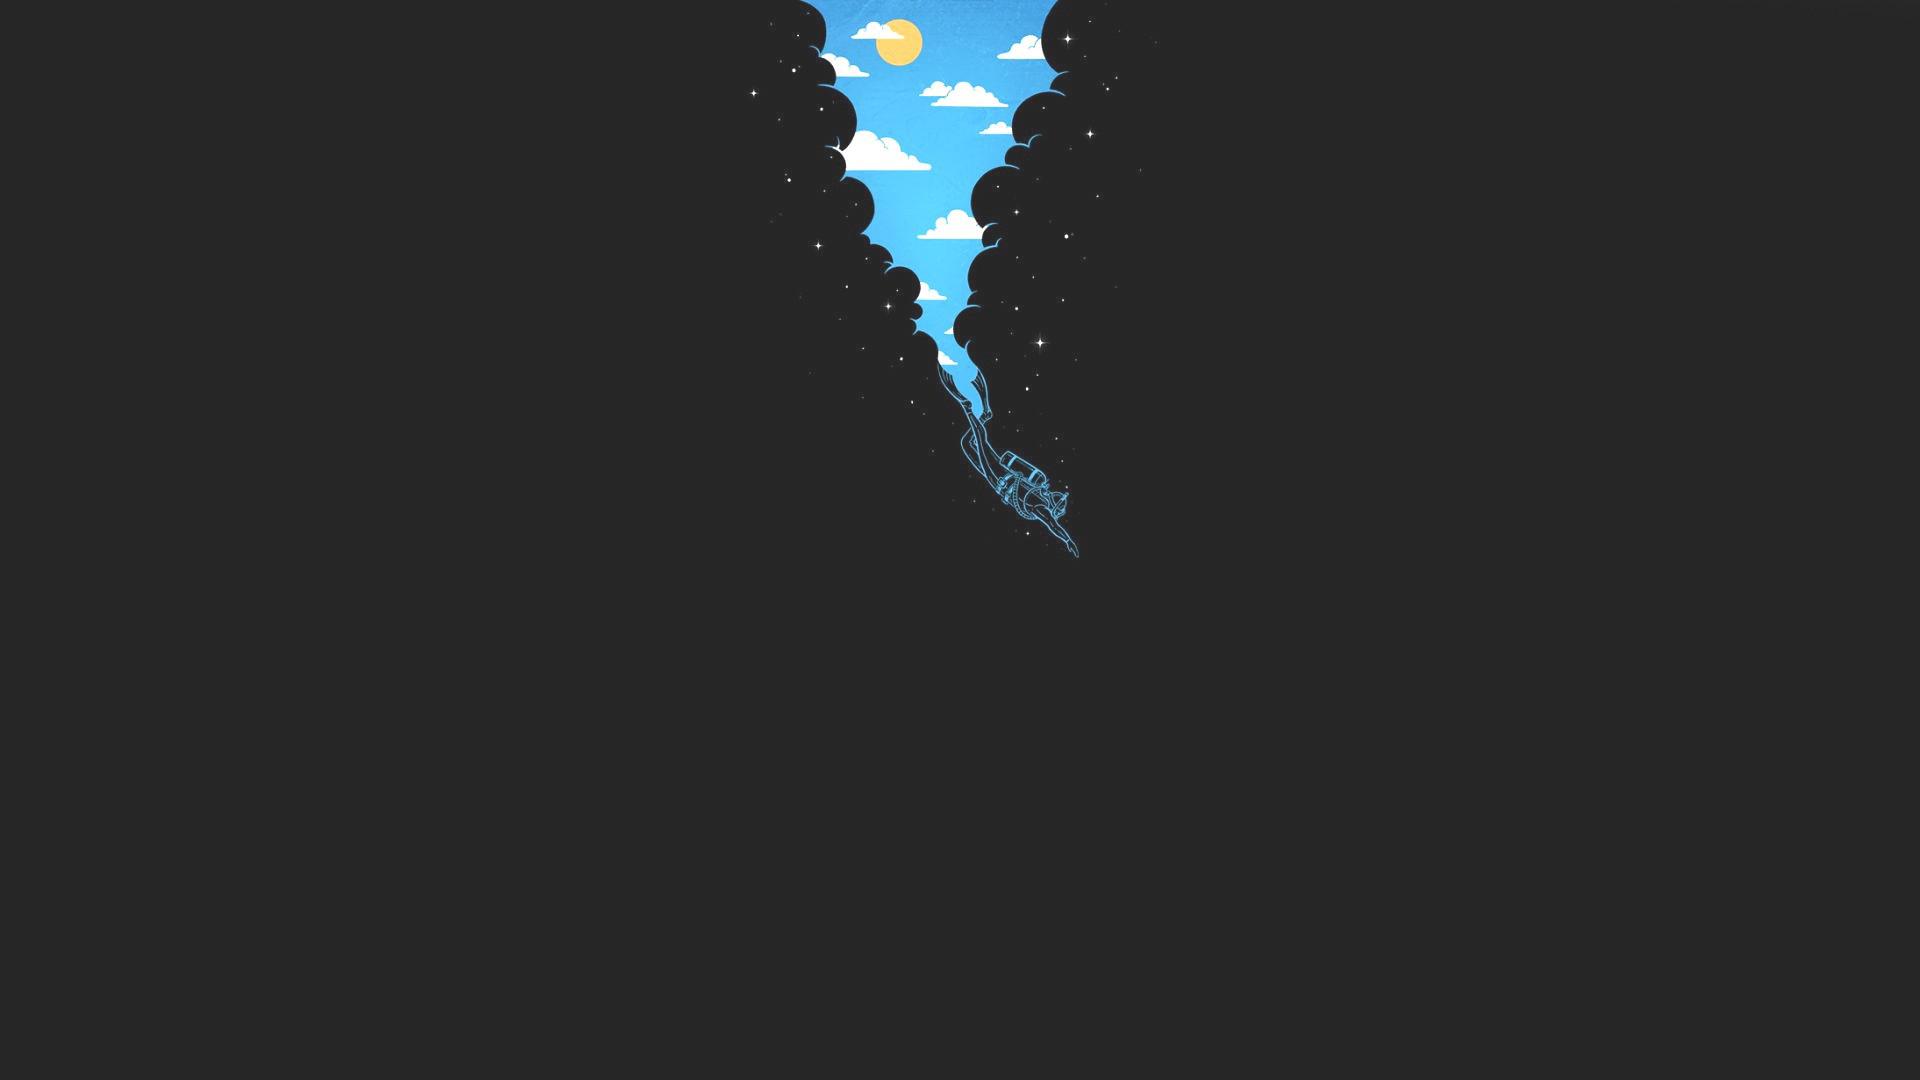 Scuba Diving Minimalism, HD Artist, 4k Wallpaper, Image